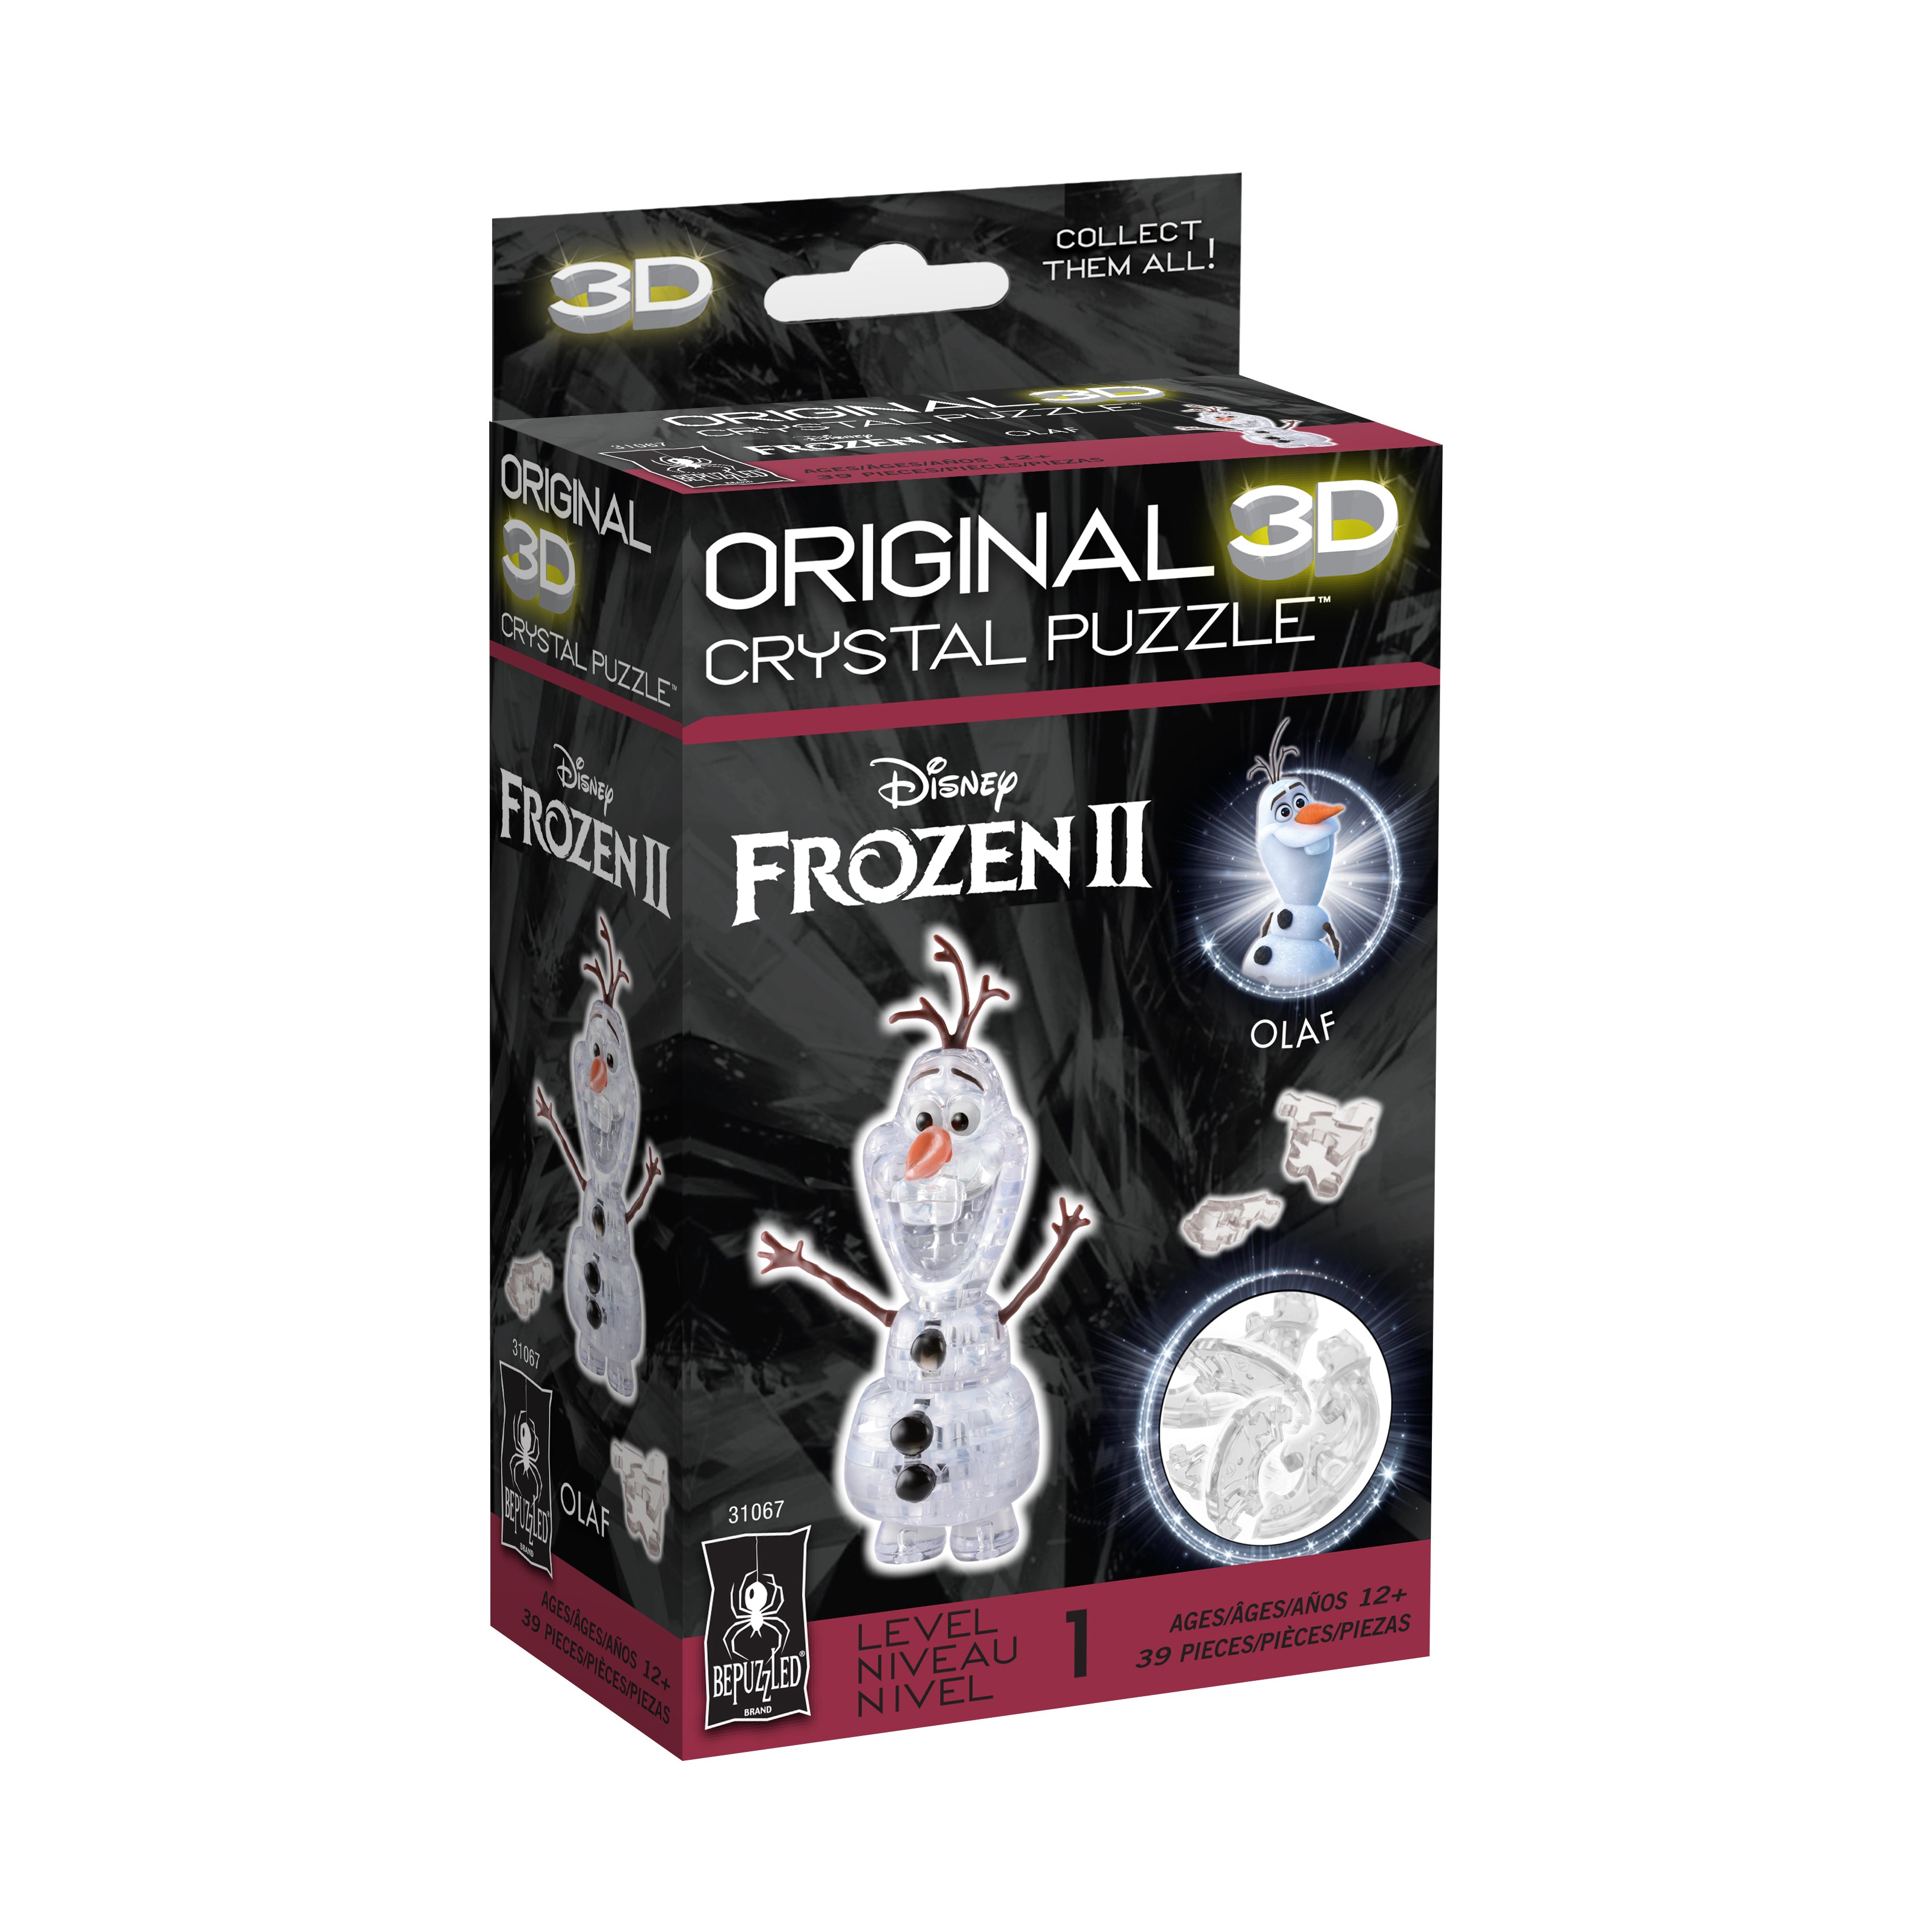 Disney Frozen II Crystal Puzzle-Olaf Snowman Original 3D Puzzle